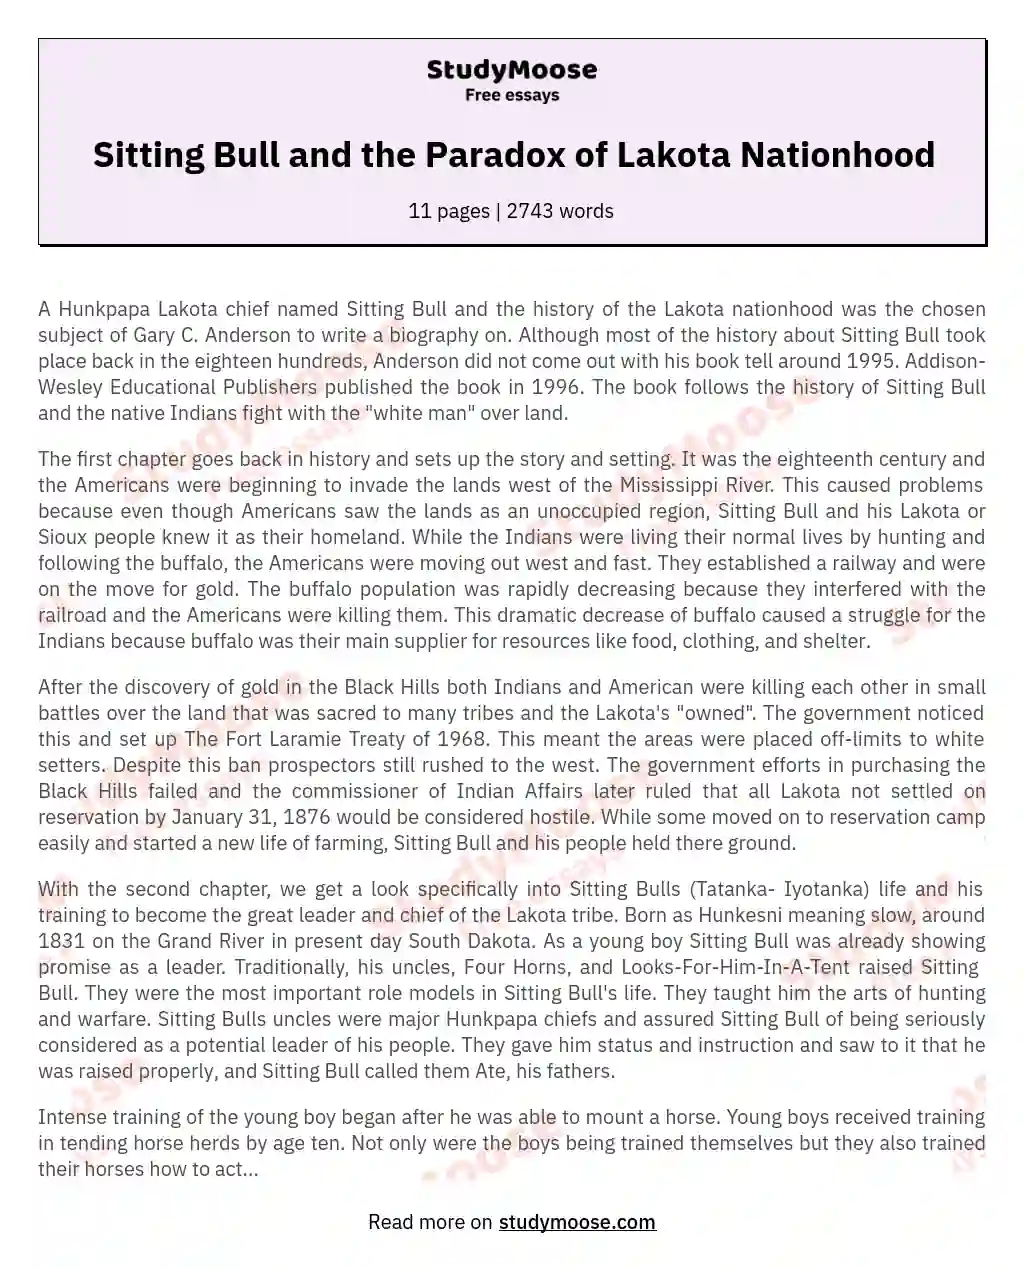 Sitting Bull: A Biography of a Lakota Chief essay